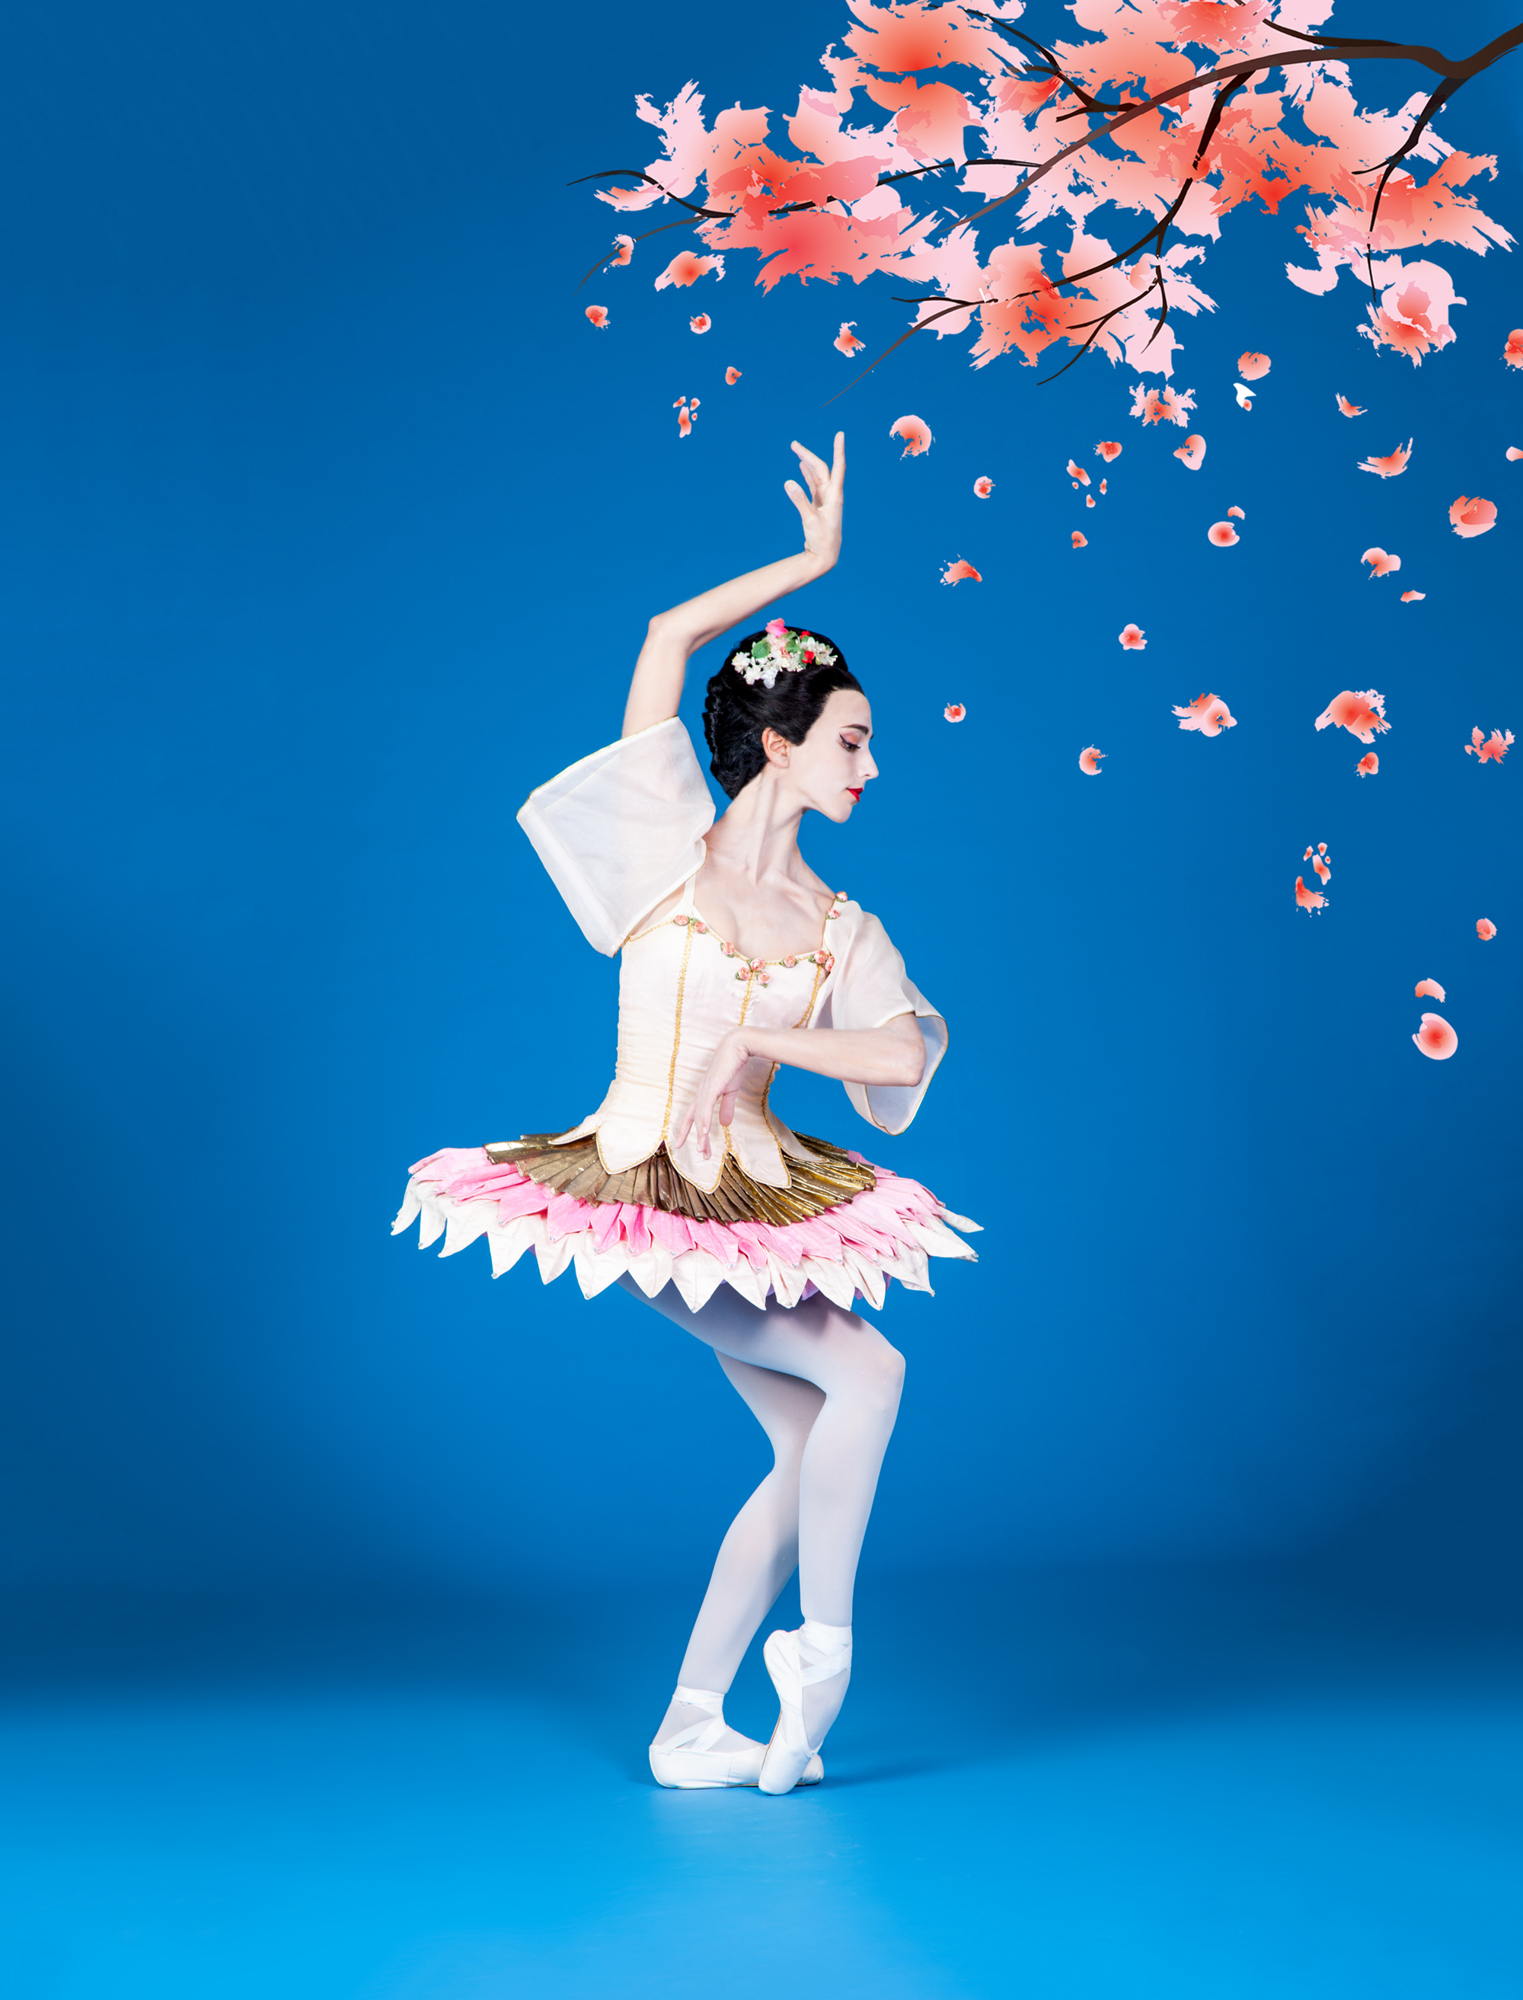 Ellen Overstreet will perform George Balanchine’s “Bugaku” in Sarasota Ballet’s final program of the season, “Great Masters of Dance.” Photo by Frank Atura